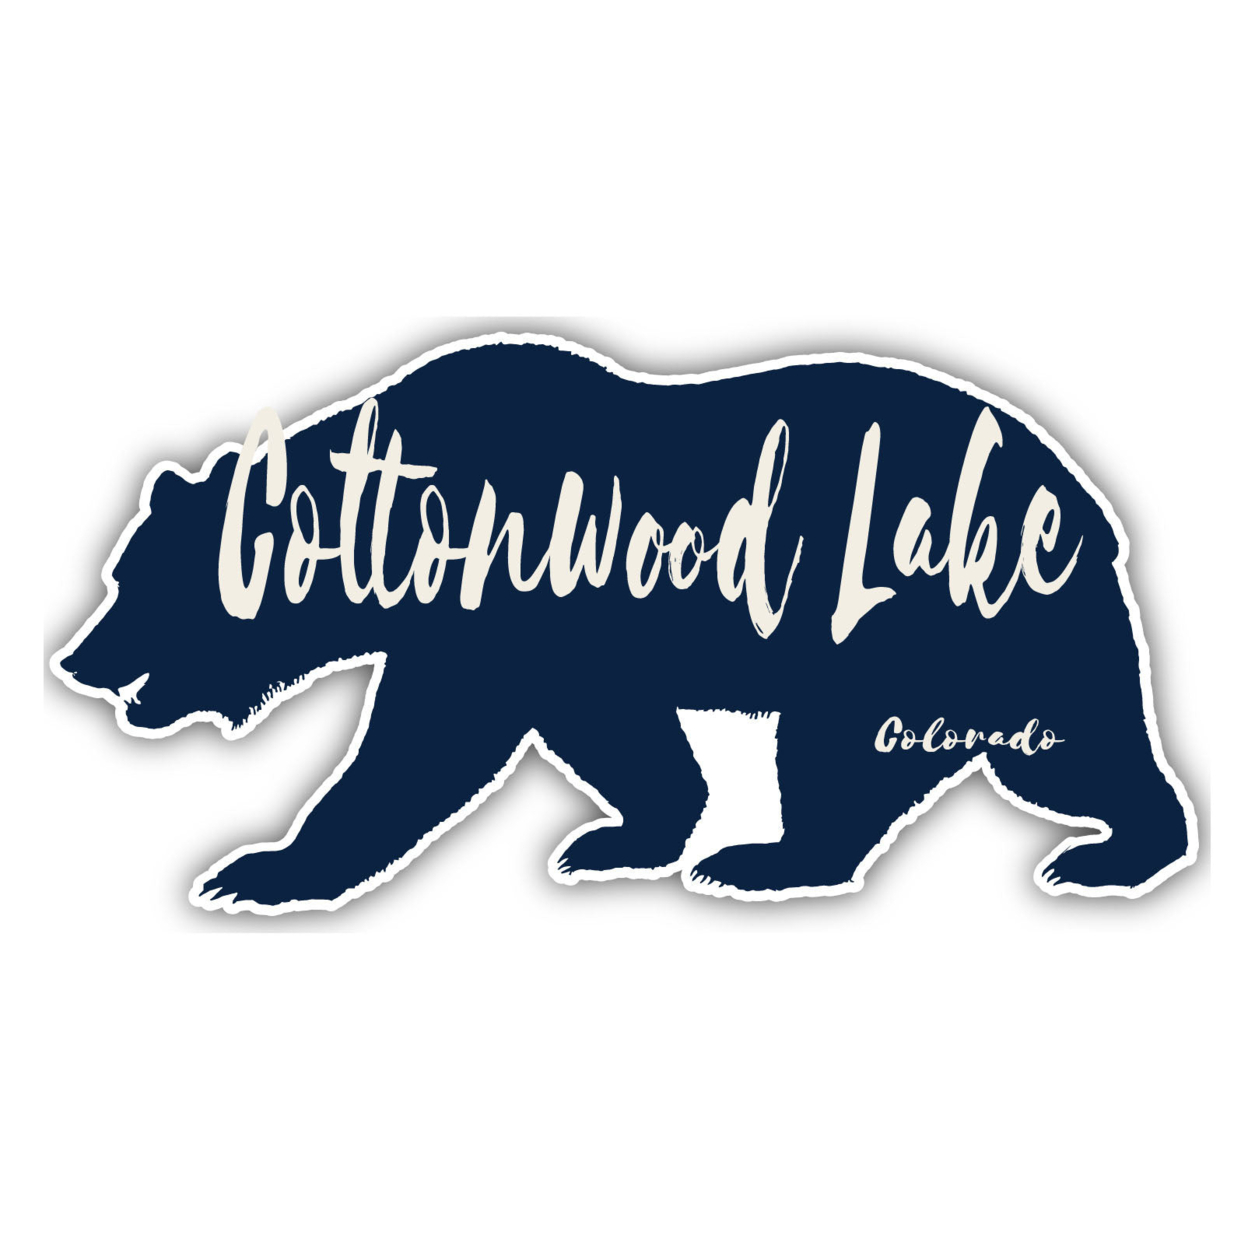 Cottonwood Lake Colorado Souvenir Decorative Stickers (Choose Theme And Size) - Single Unit, 6-Inch, Camp Life